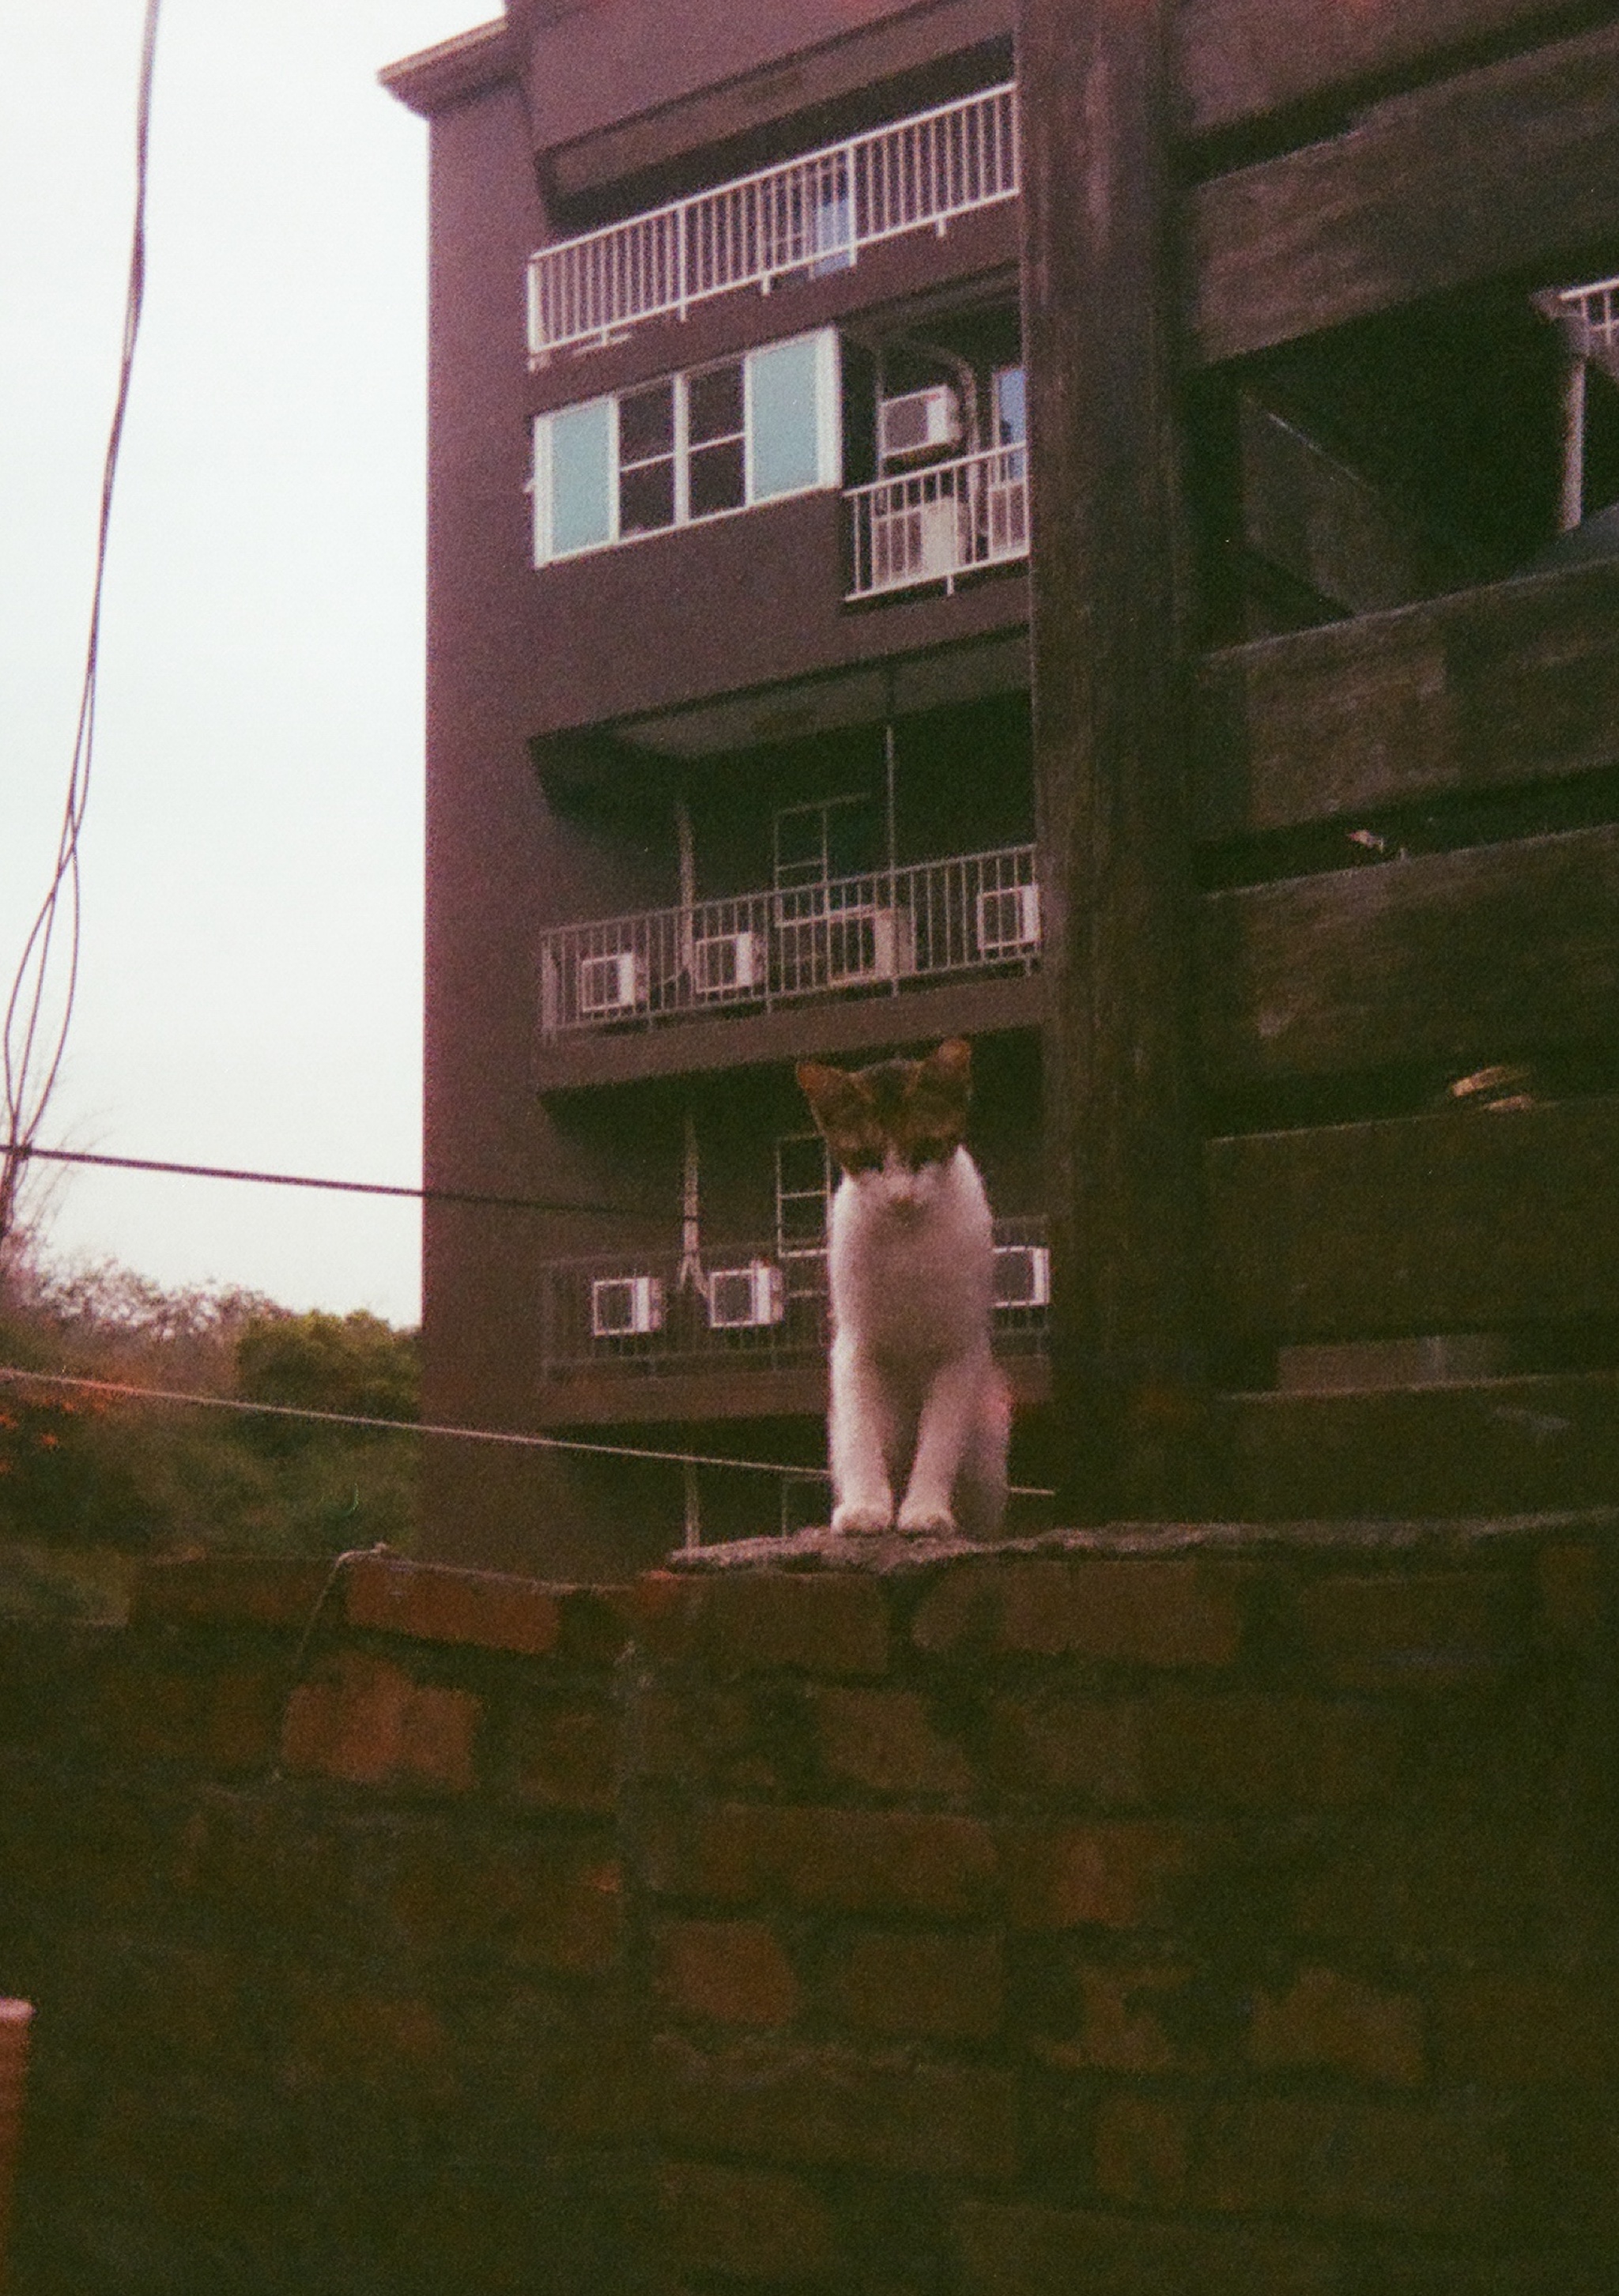 a cat sitting on a brick wall